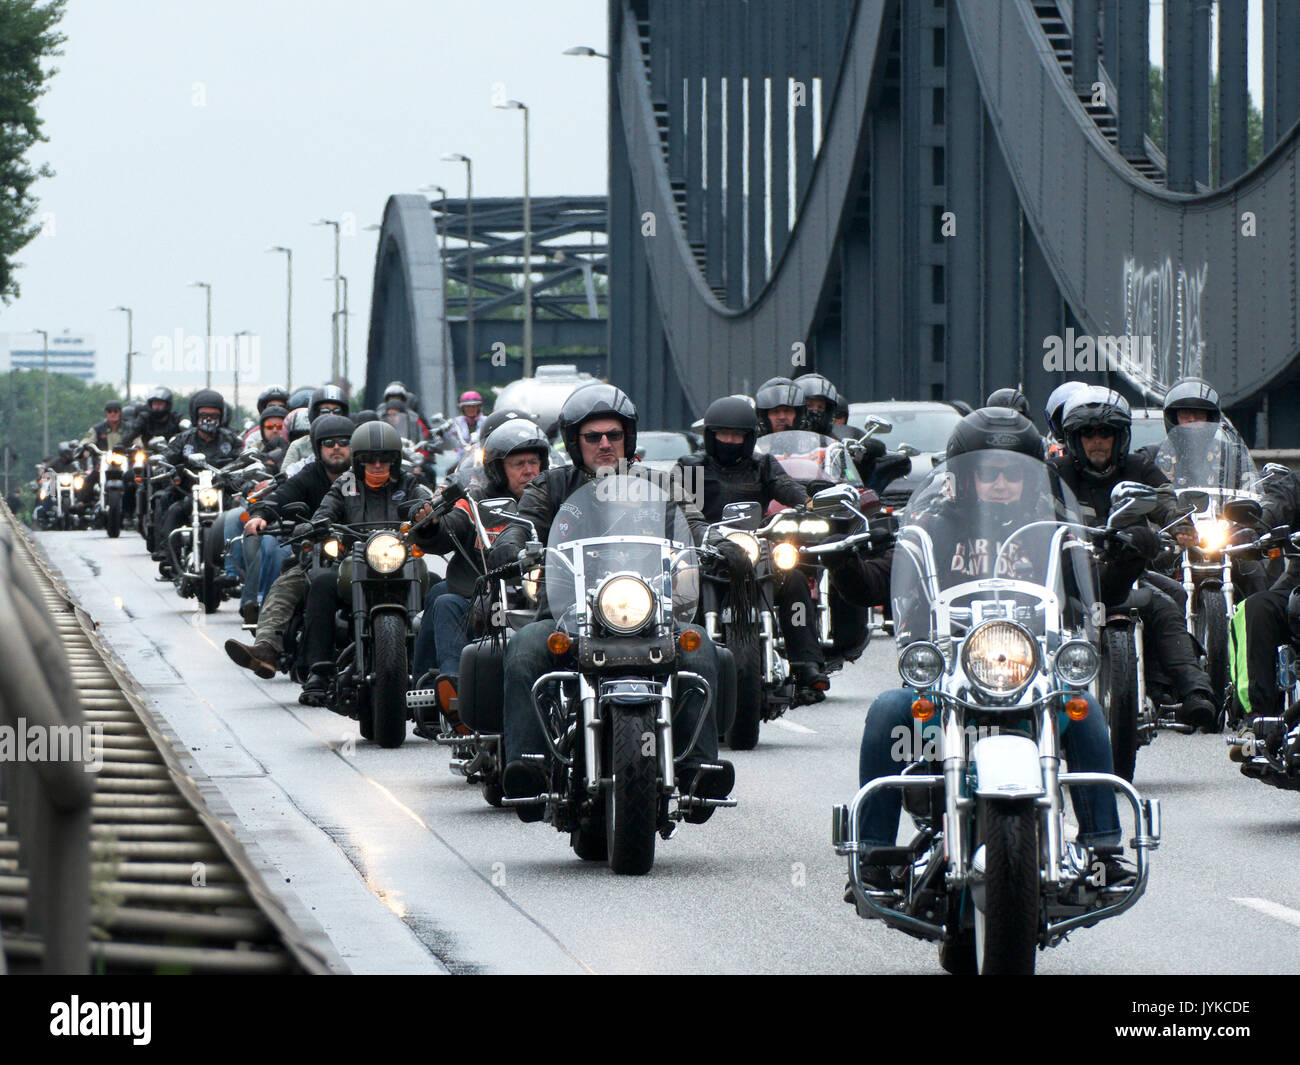 Hamburg Harley Days Biker-City-Event big motorbike motorbiker parade  Germany Stock Photo - Alamy